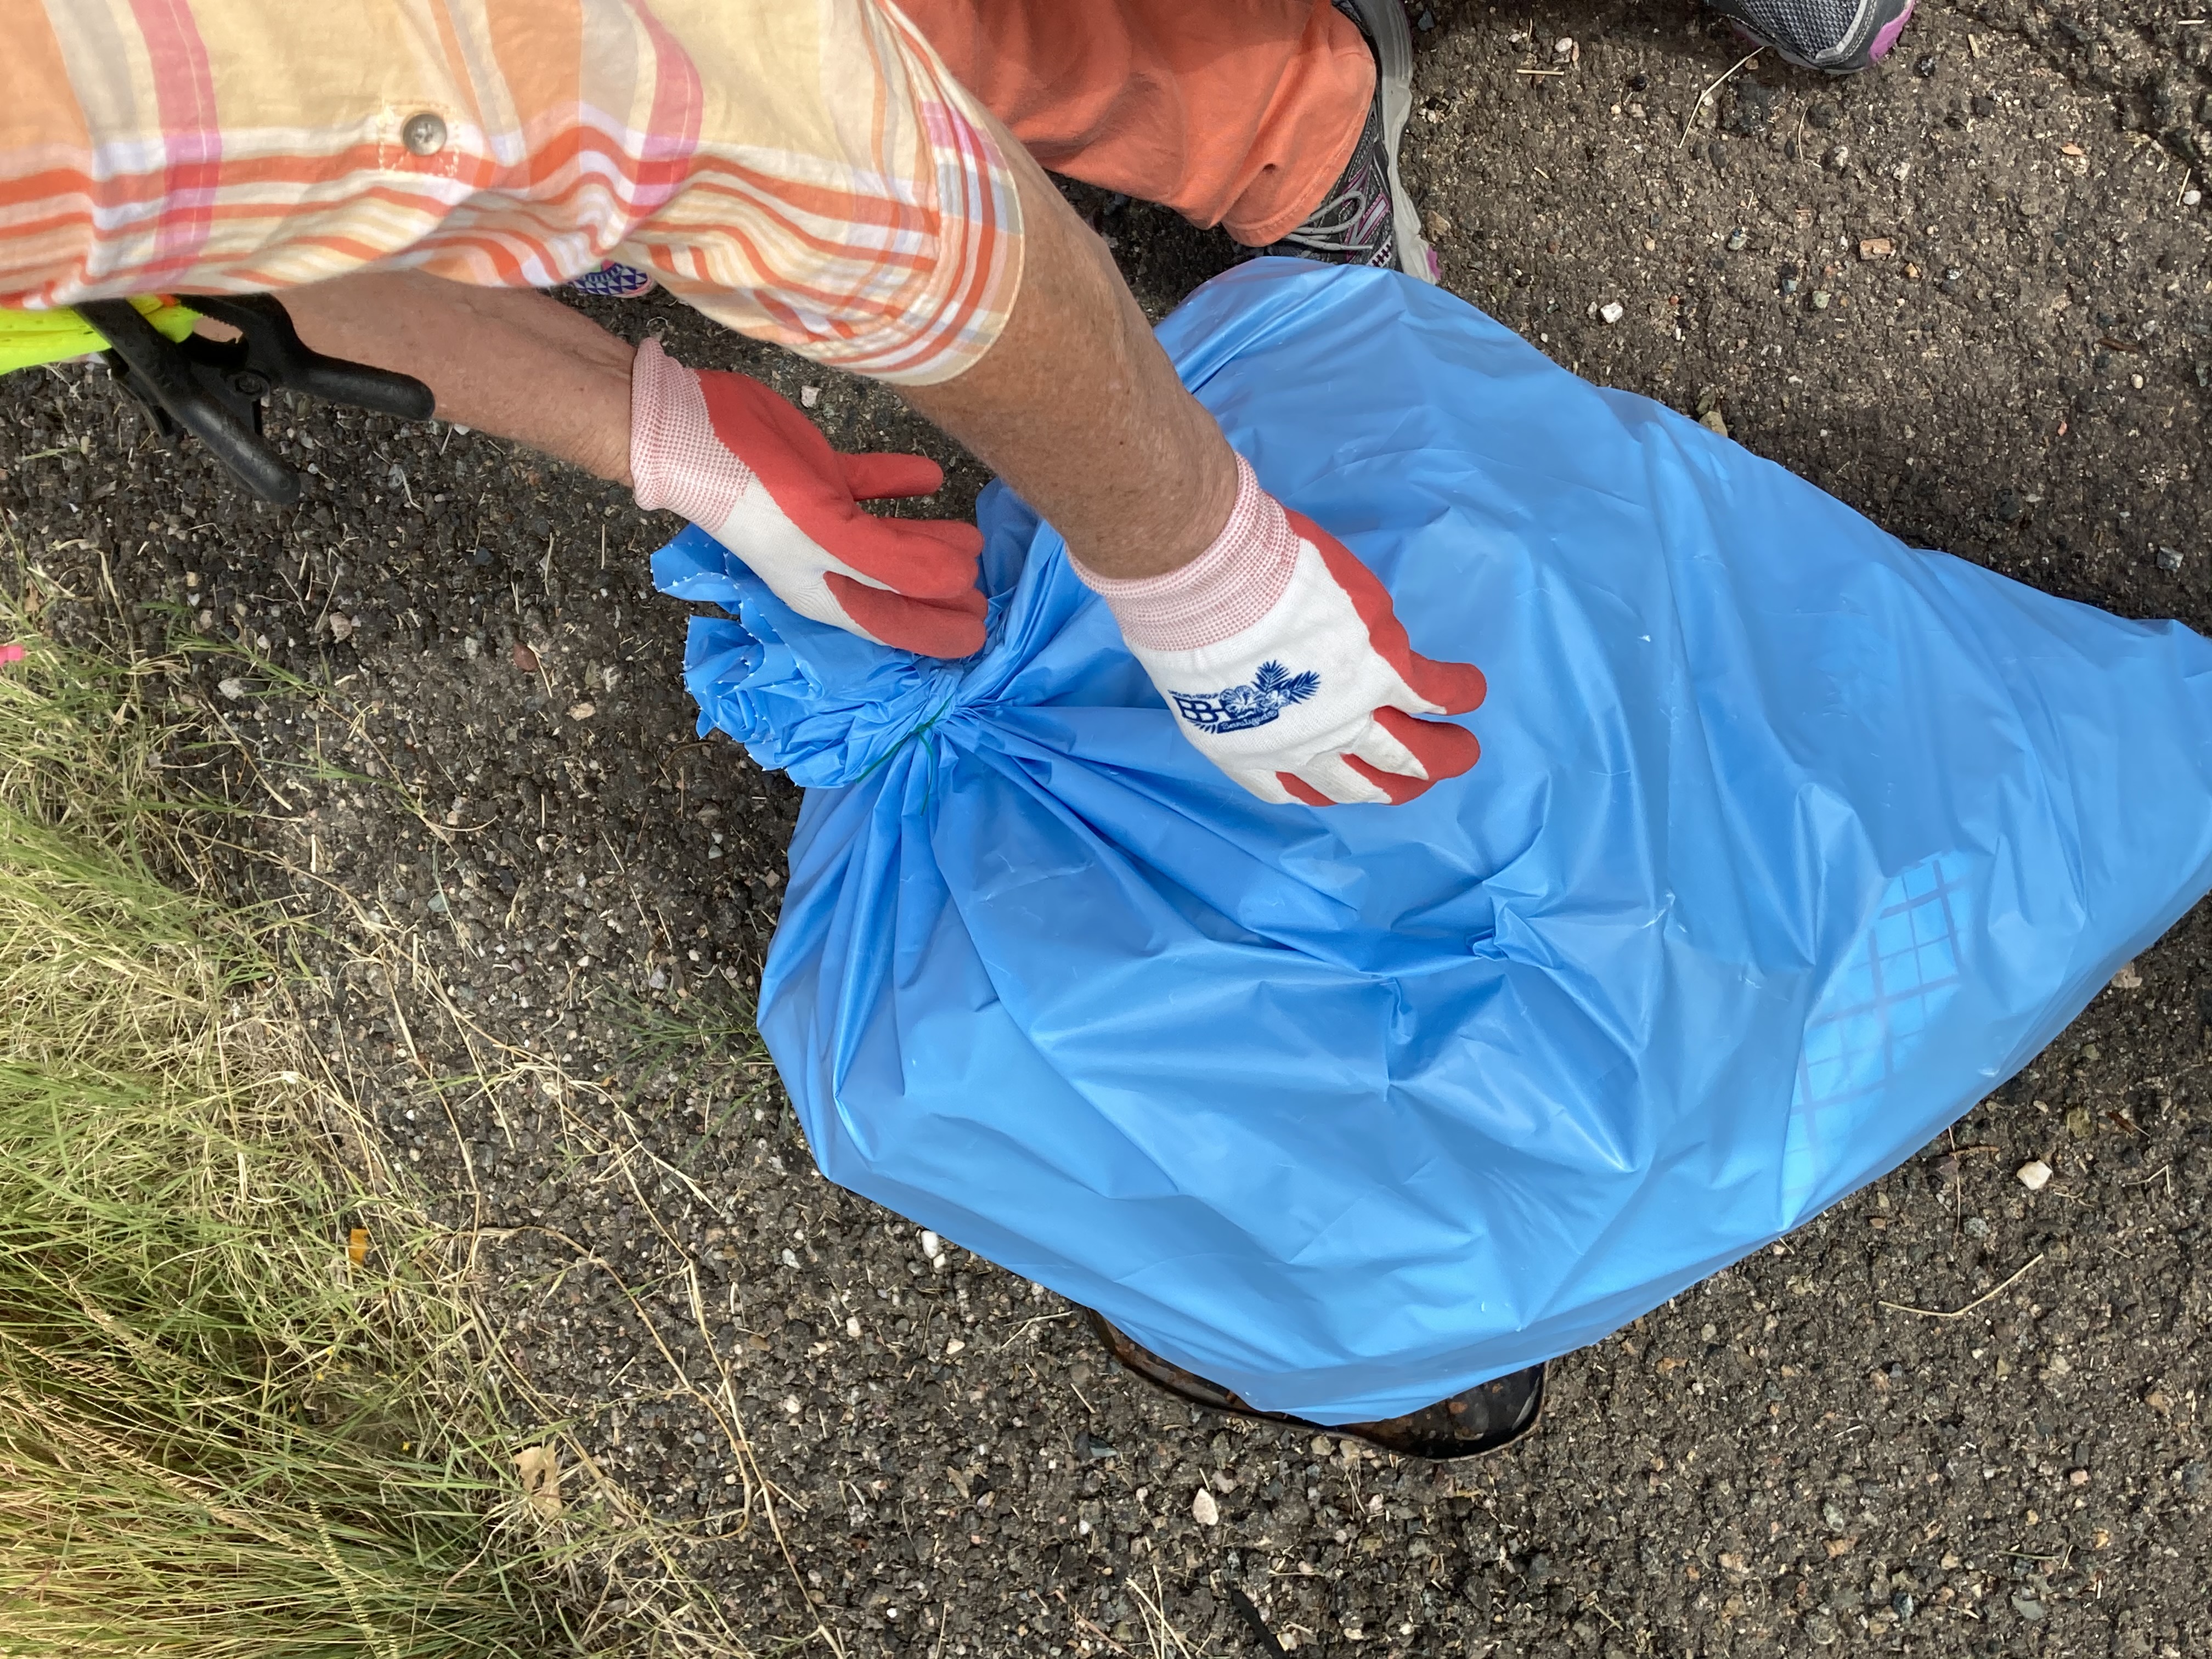 Adopt a Highway volunteer picks up trash